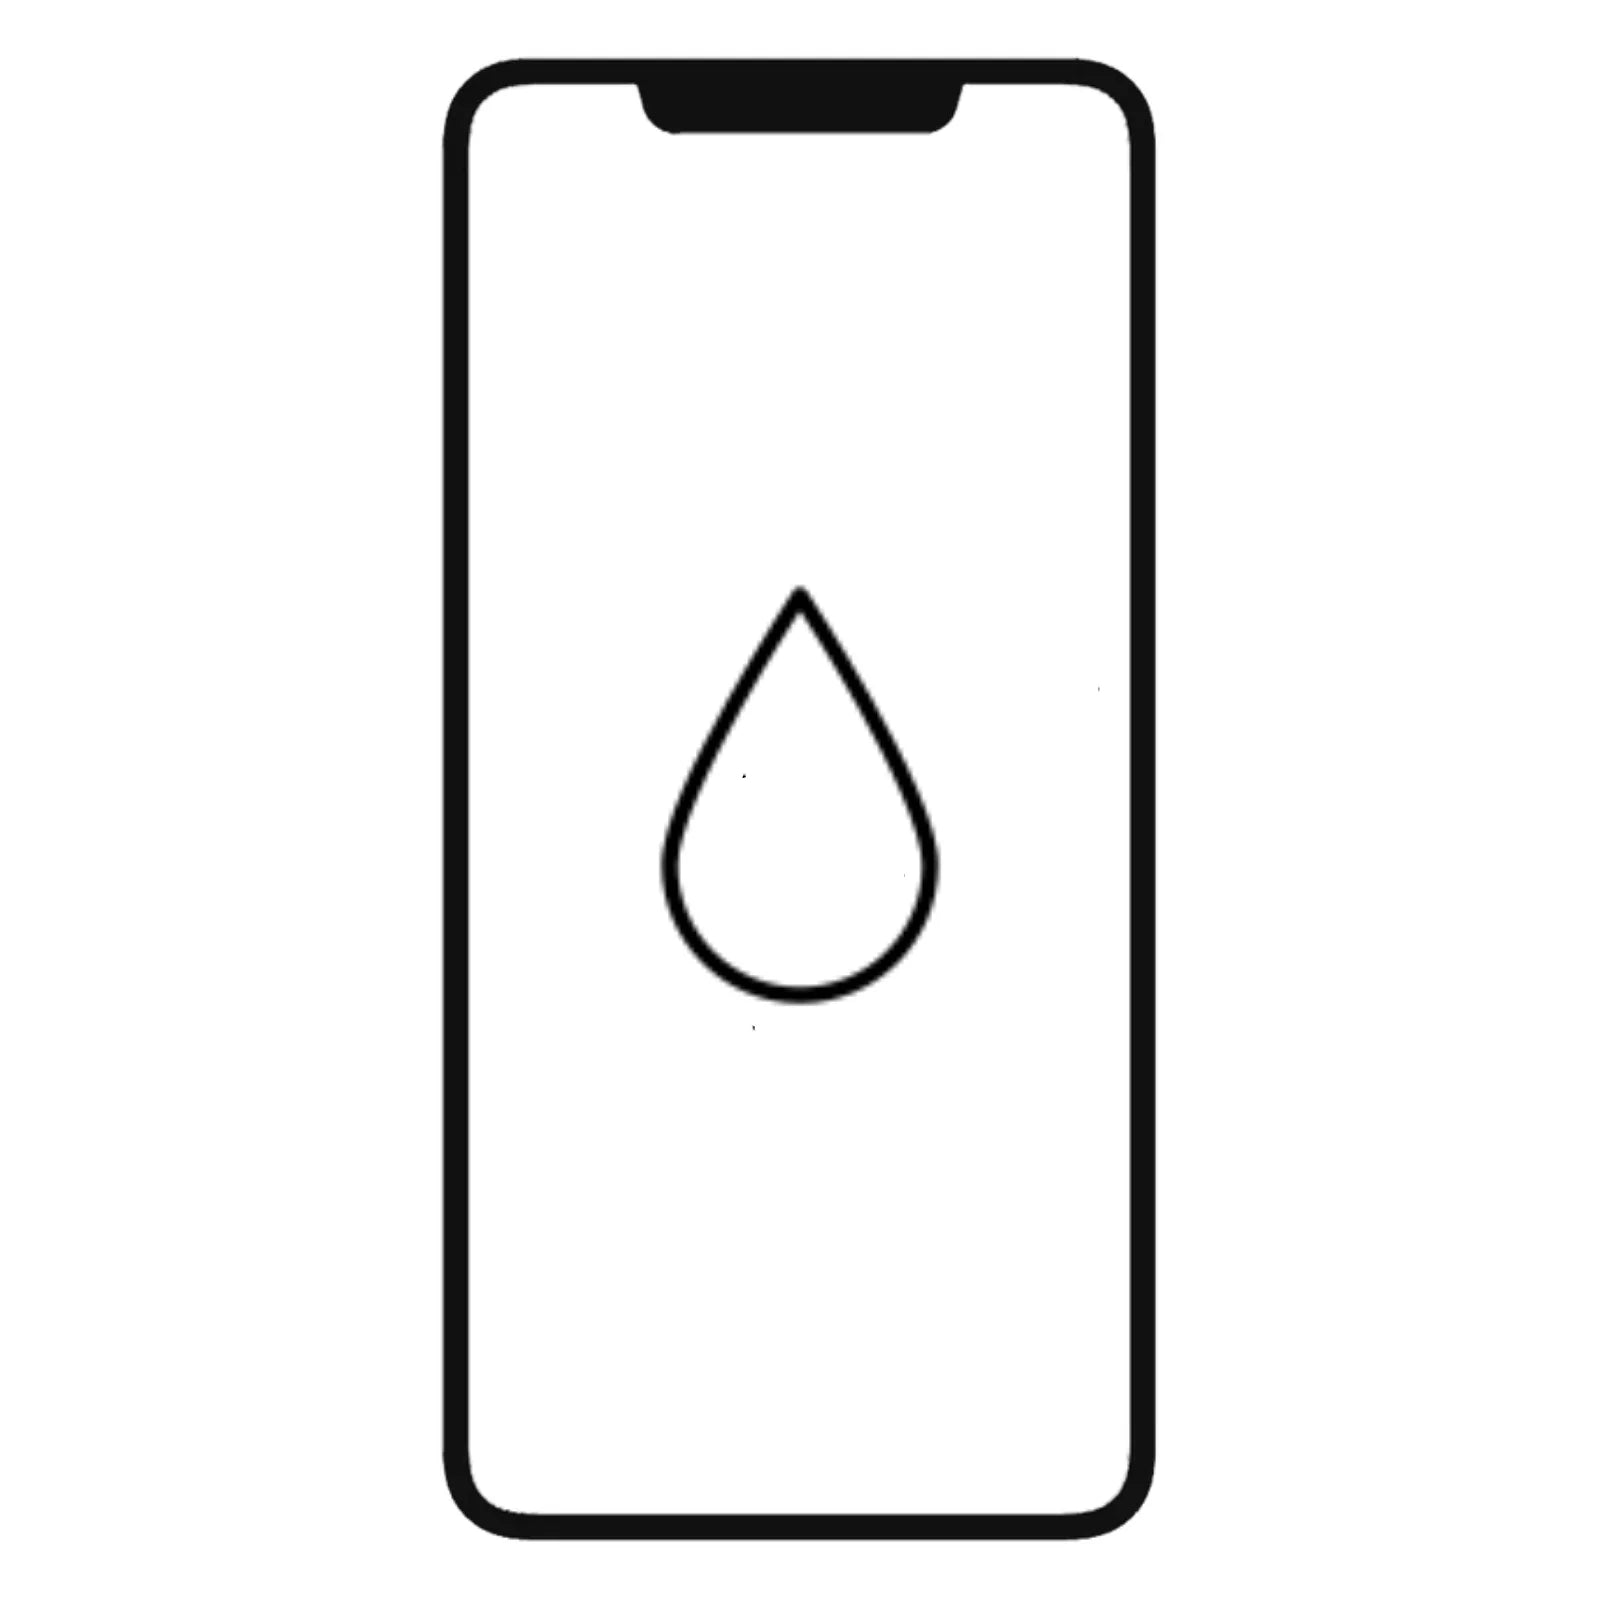 iPhone 12 Pro Max Water Damage Repair Service